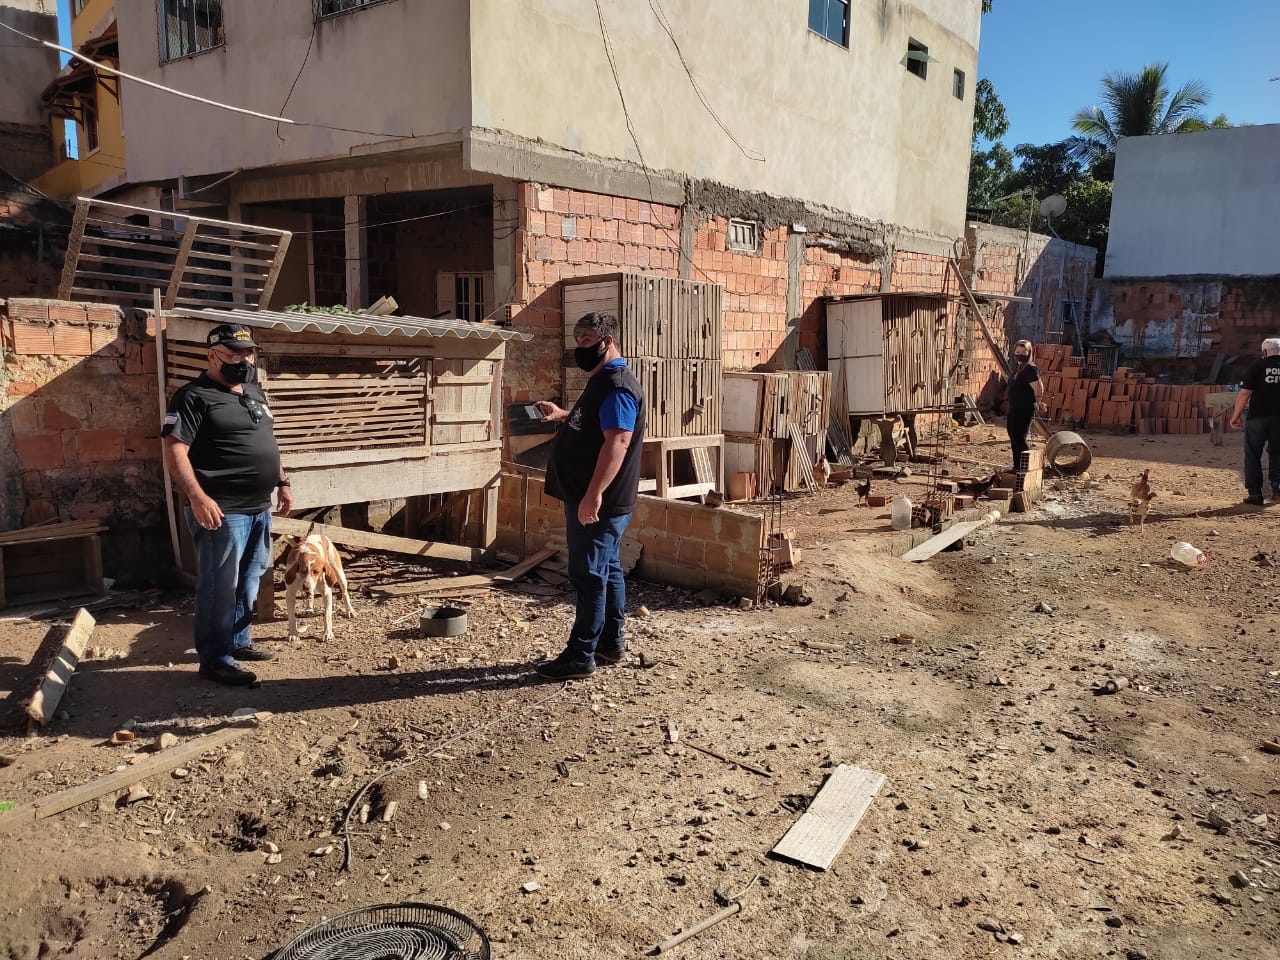 Autônomo de 53 anos foi detido na própria casa, no bairro Vila de Itapemirim, que fica na Zona Rural de Itapemirim